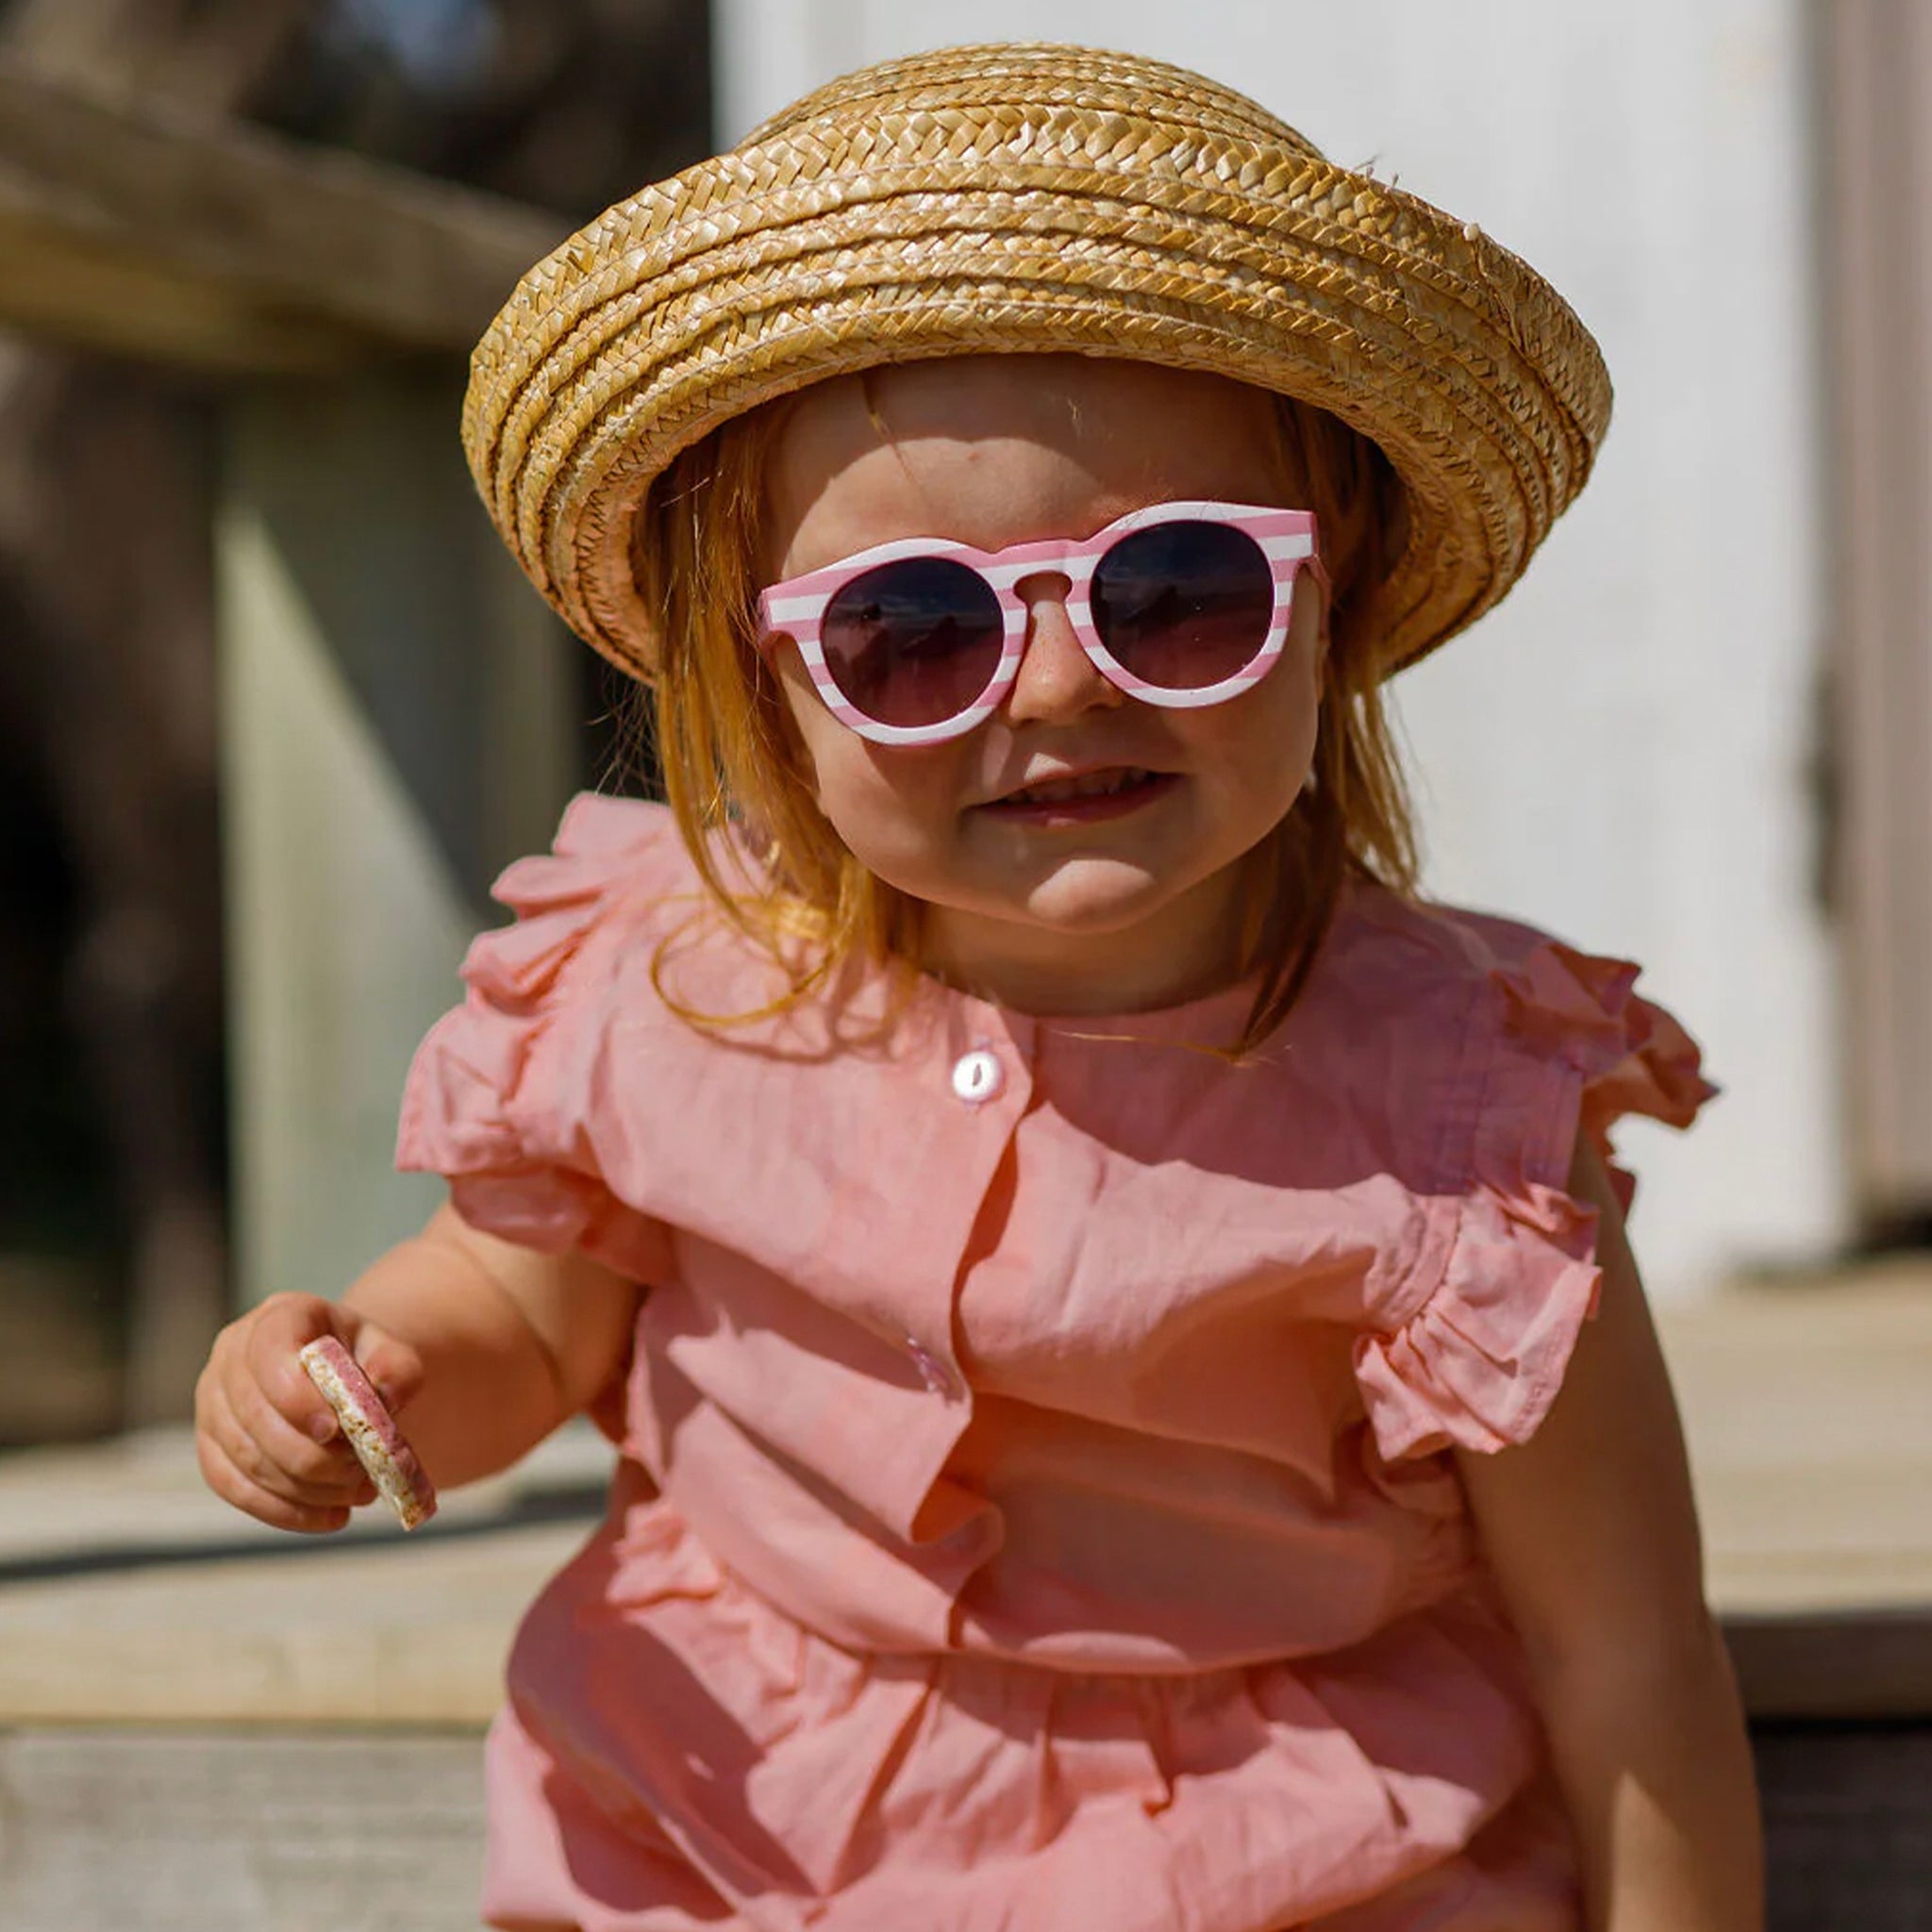 Frankie Ray Kid's Sunglasses Pixie Baby - Royal Blue